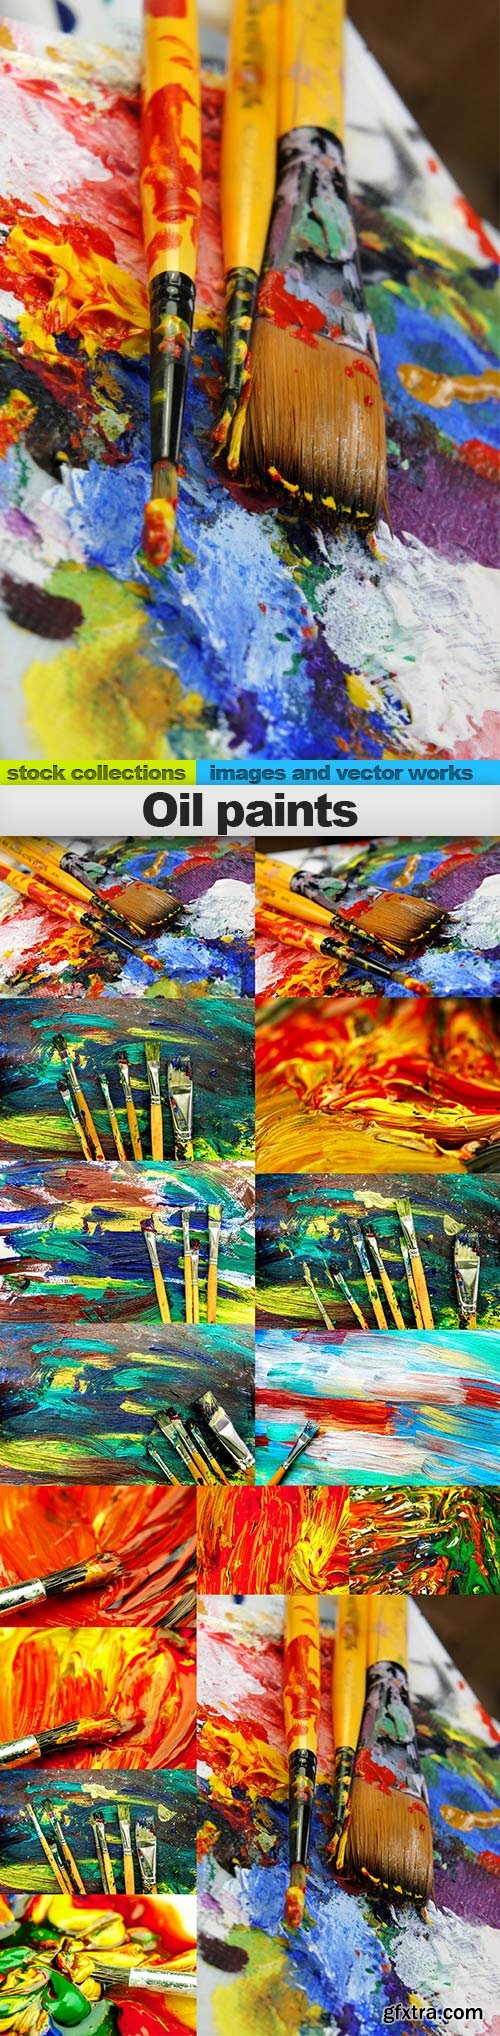 Oil paints, 15 x UHQ JPEG